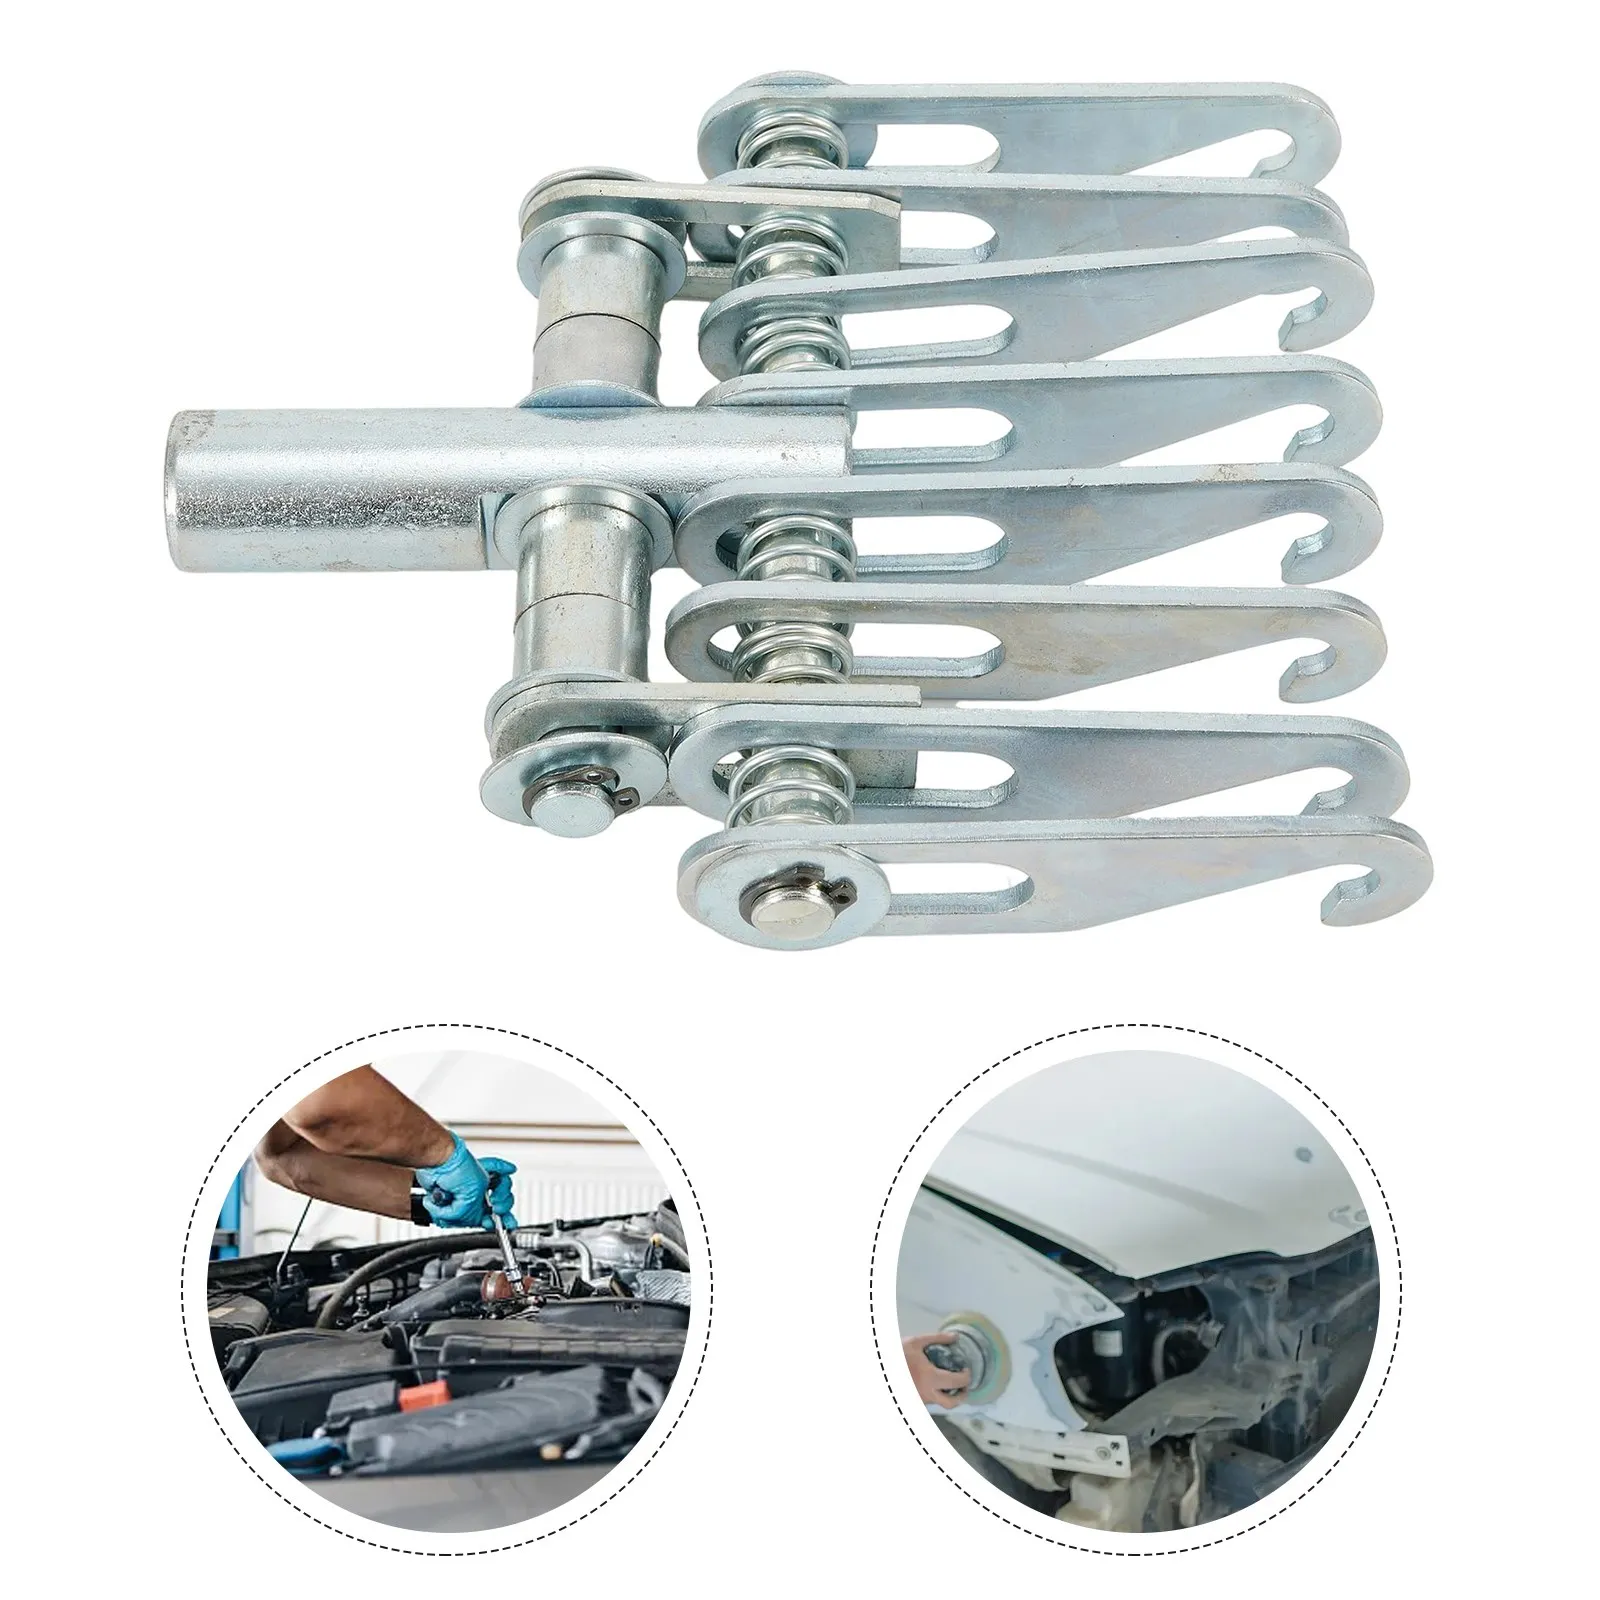 

Auto Car Body 8 Finger Dent Repair Puller Claw Hook For Slide Hammer Tool M16 Unique Spring Design Auto Repair Tools